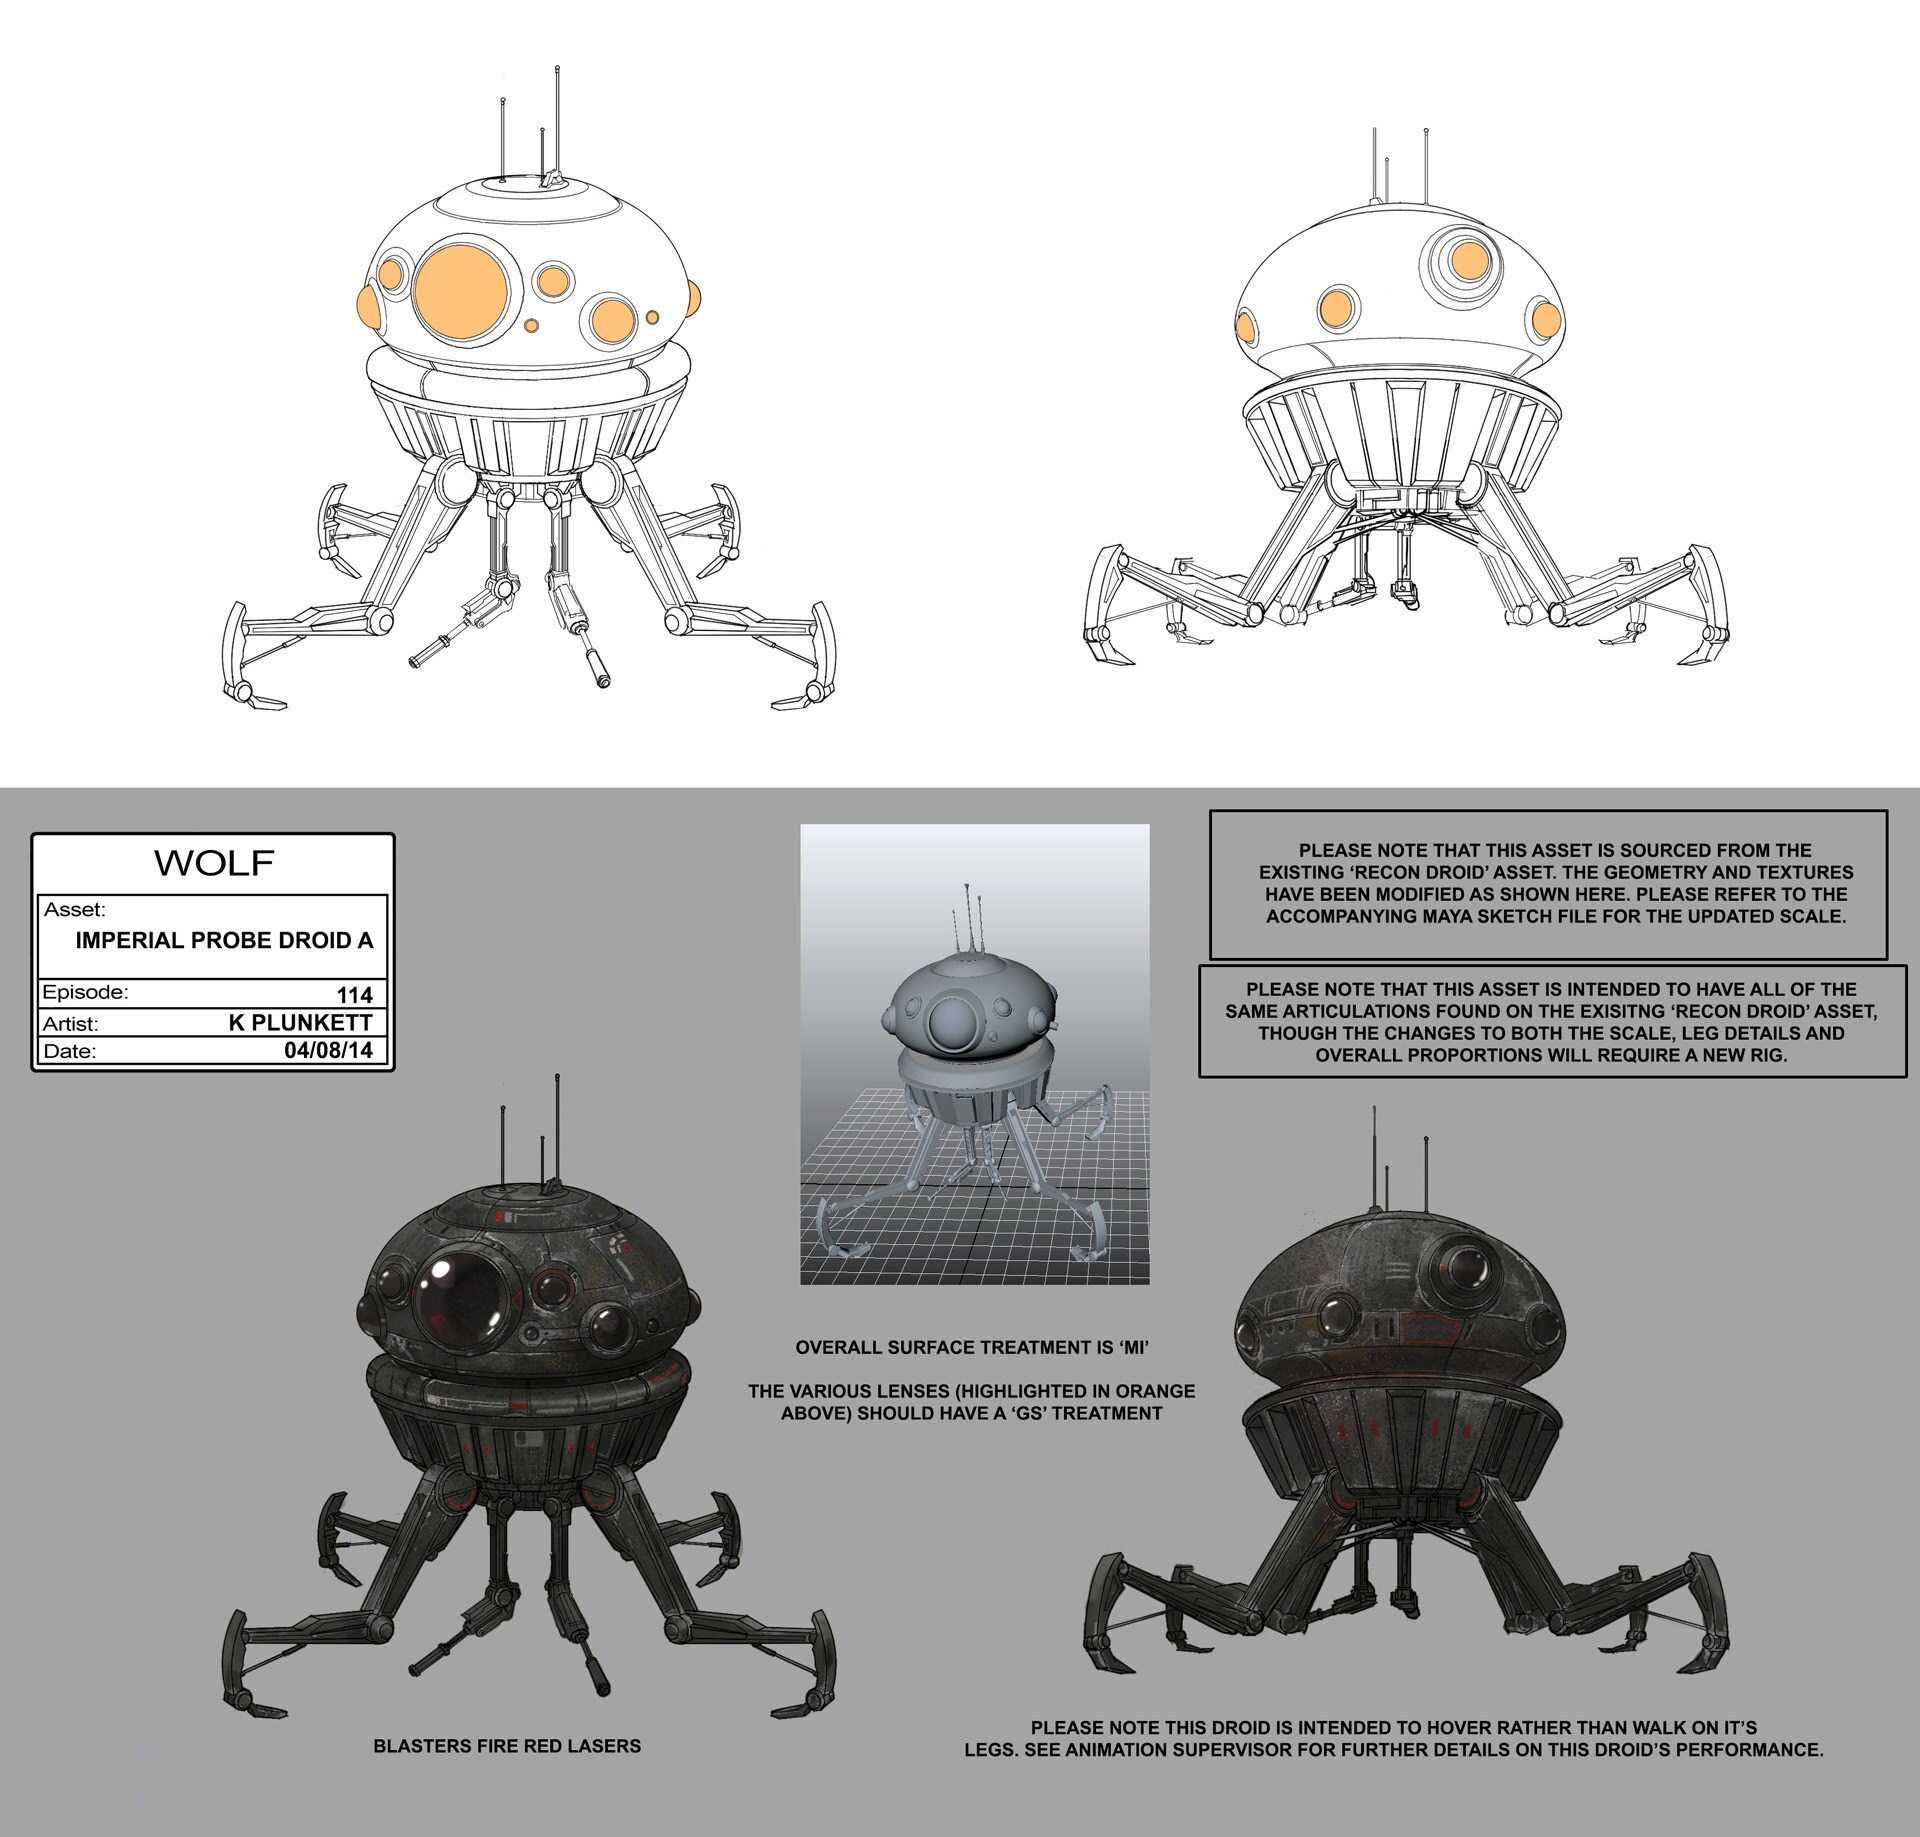 Imperial probe droid illustration by Kilian Plunkett.